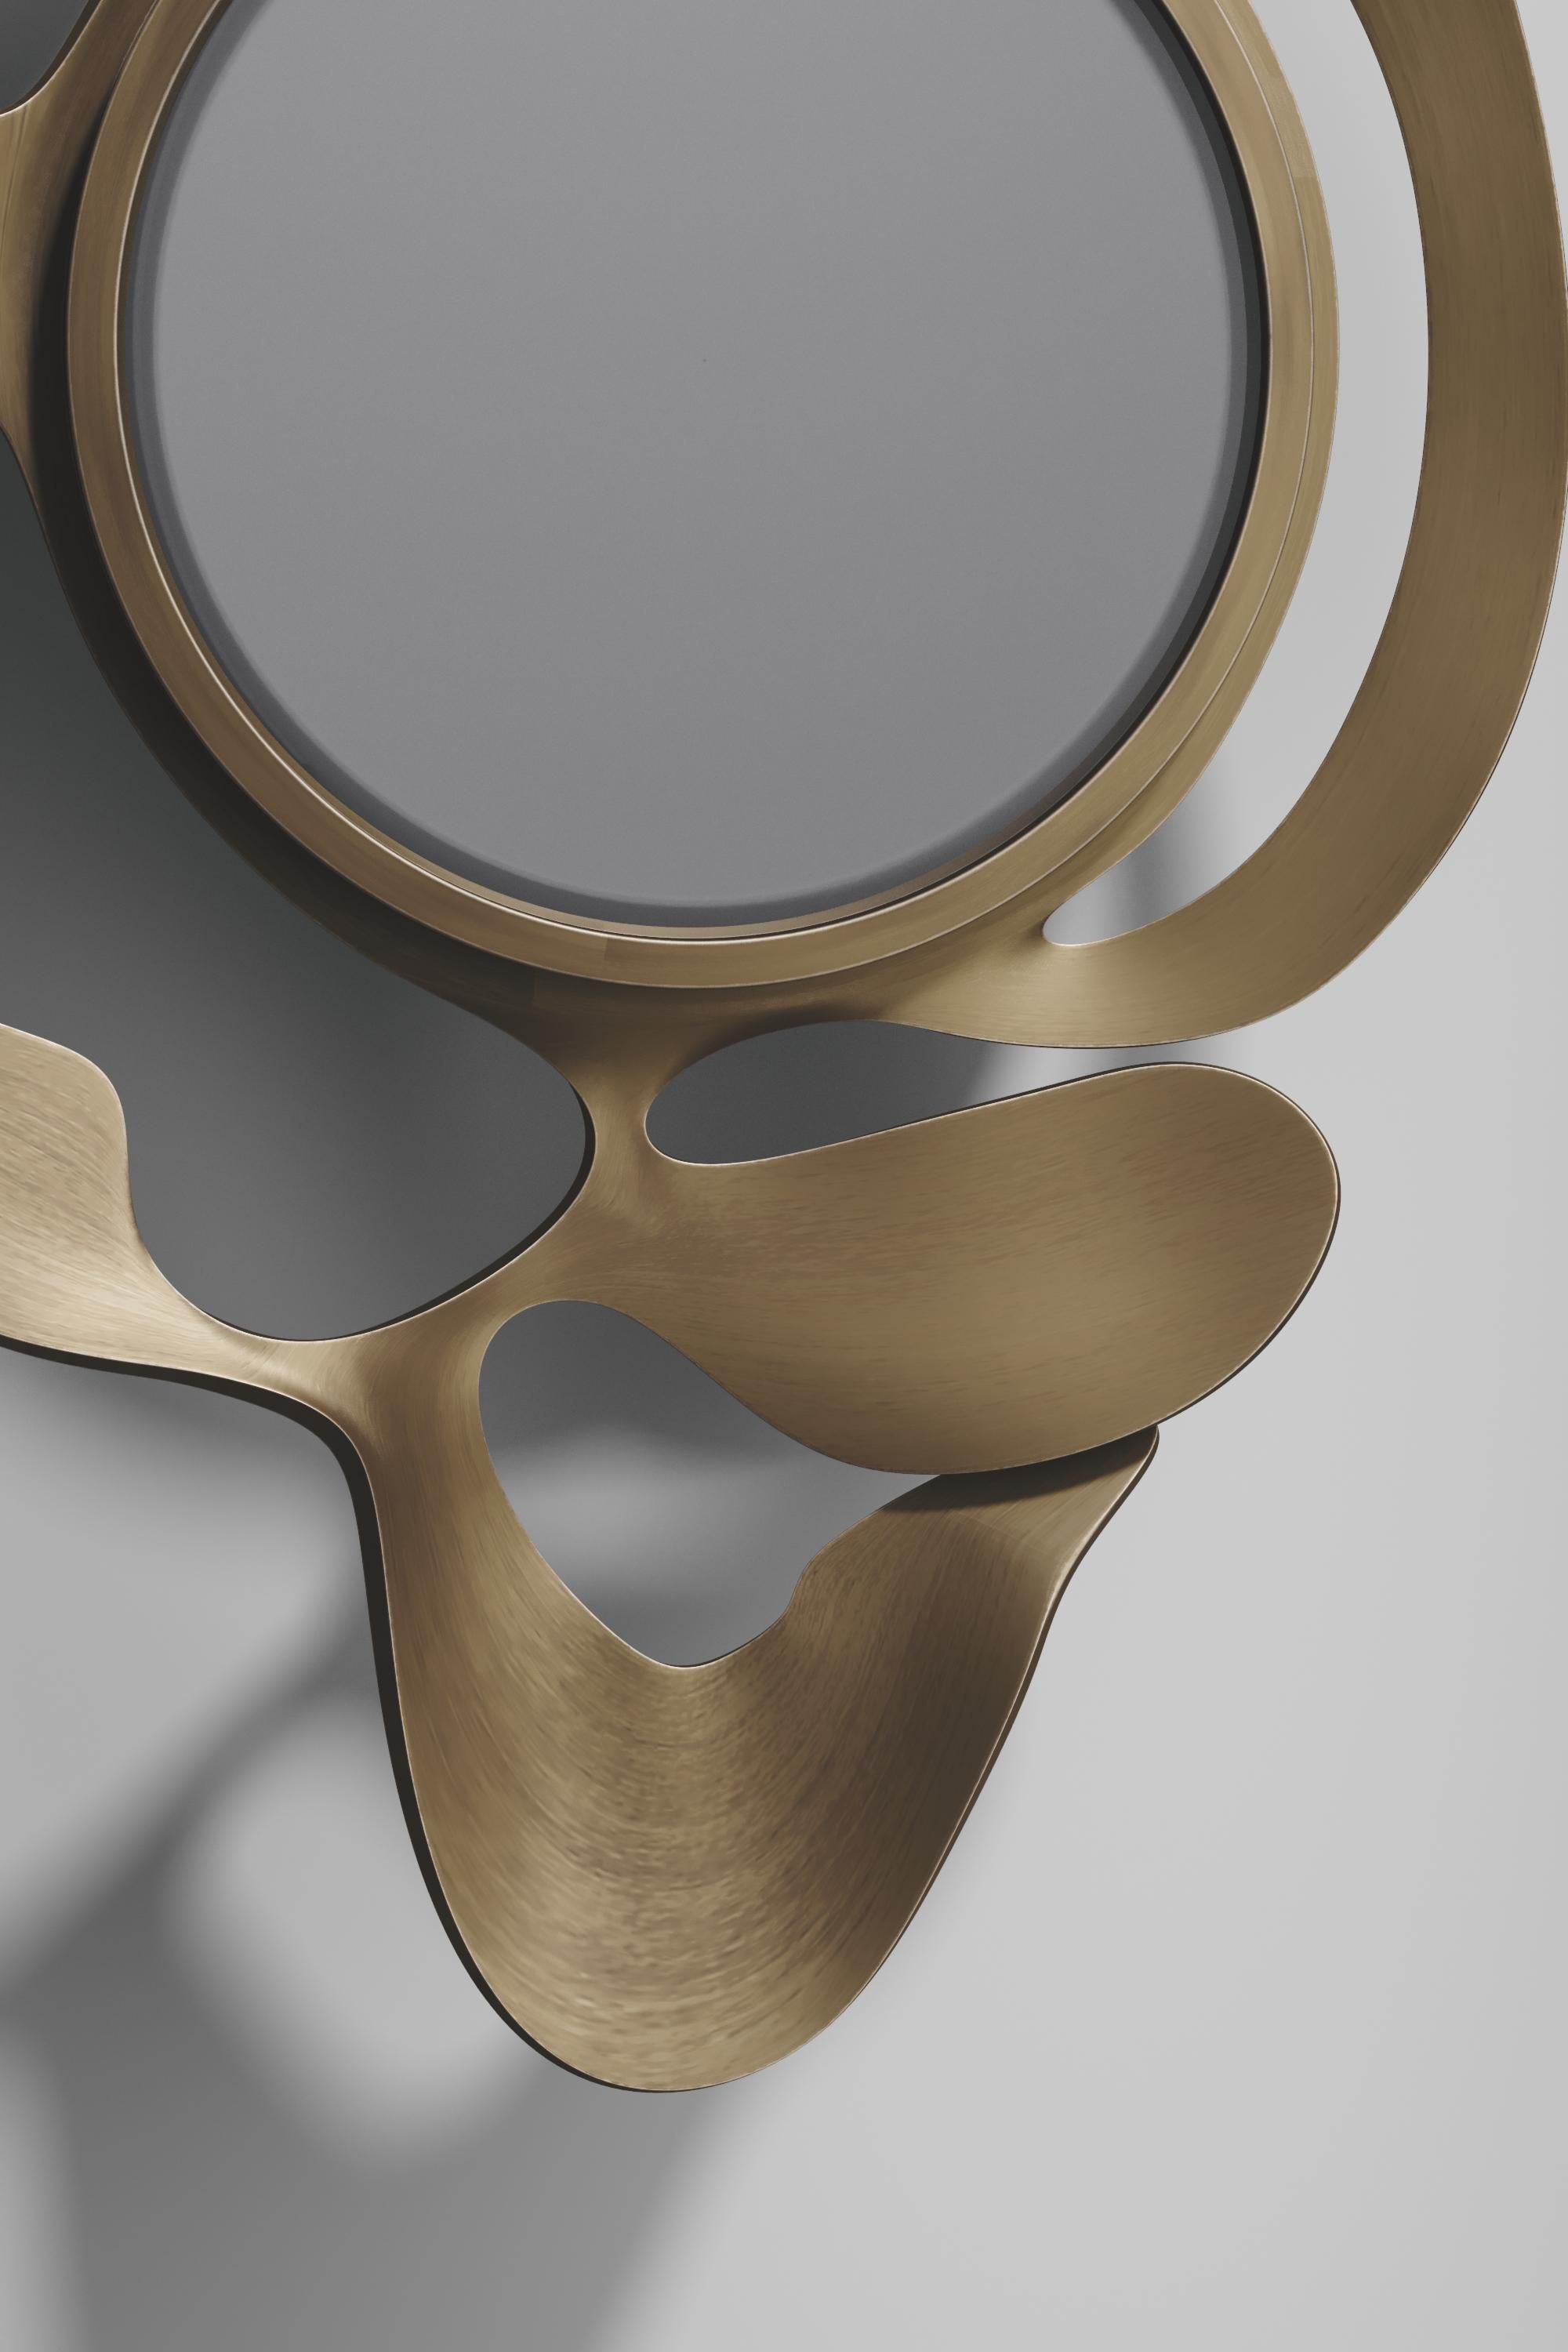 French  Bronze Patina Brass Two Tone Inlaid Mirror by Kifu Paris For Sale